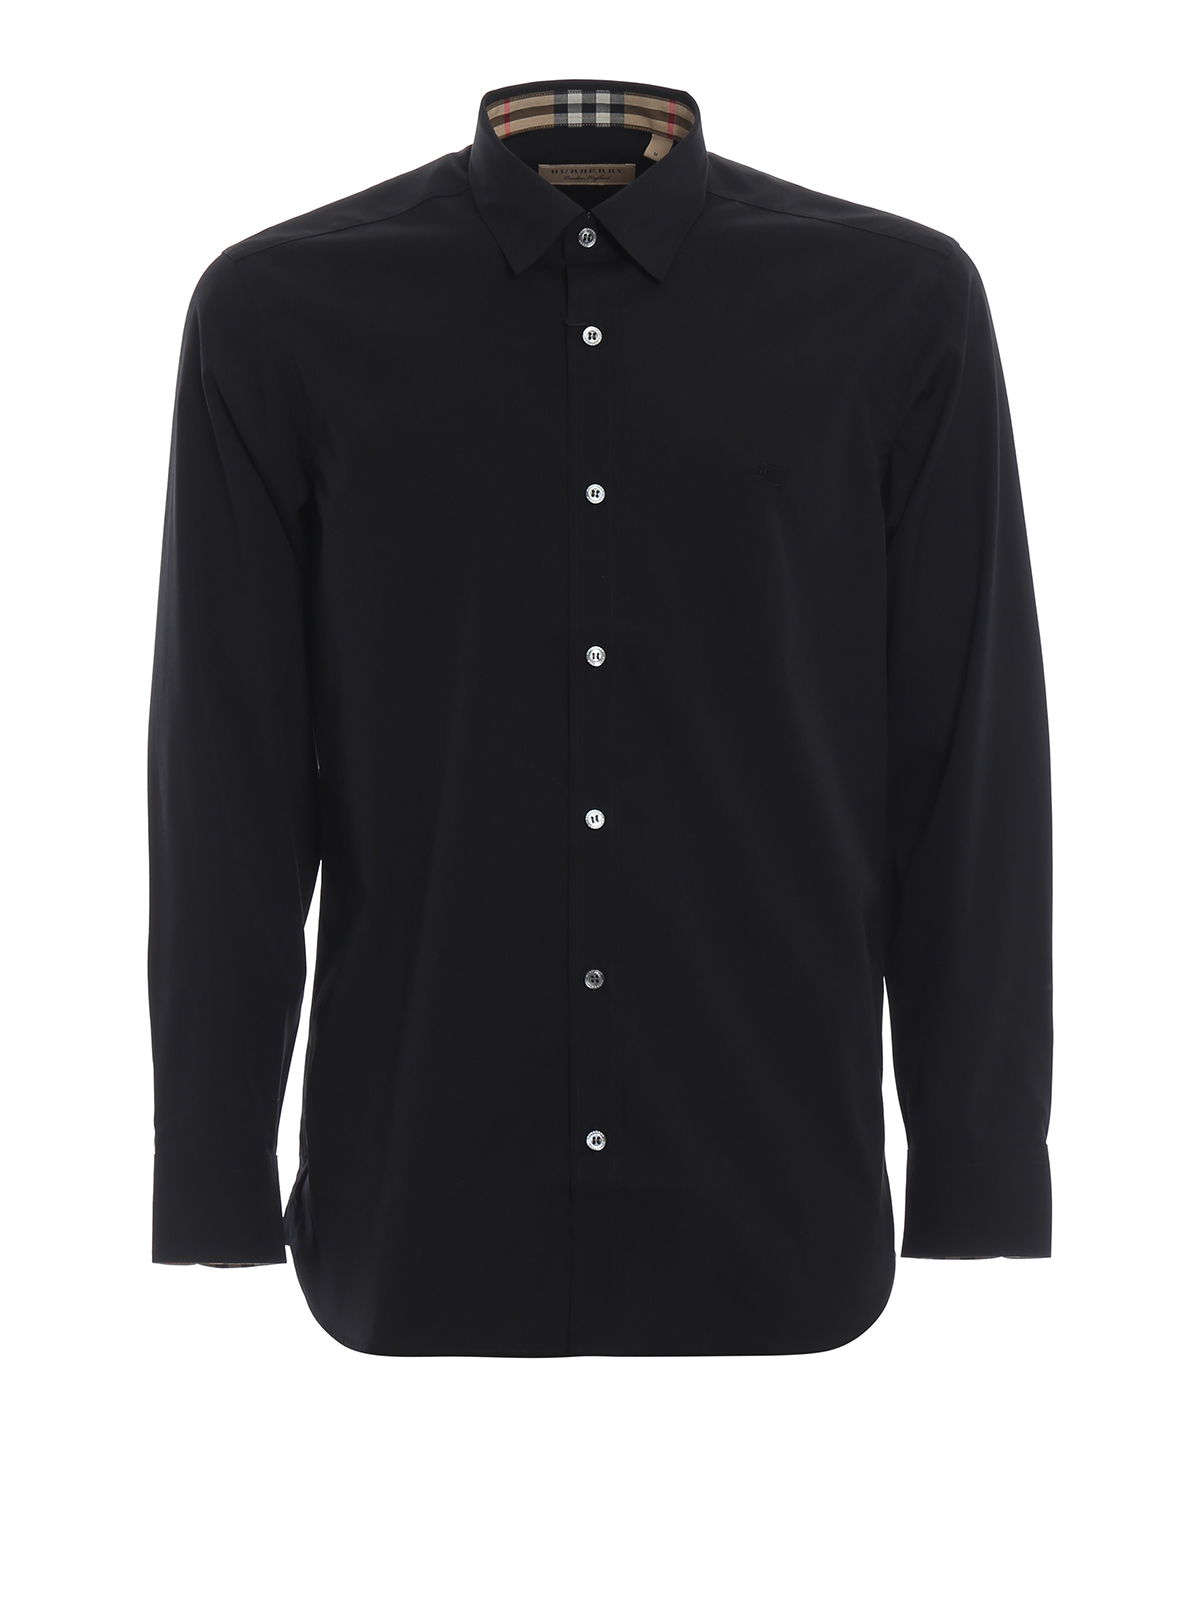 Shirts Burberry - William black poplin shirt - 8003074 